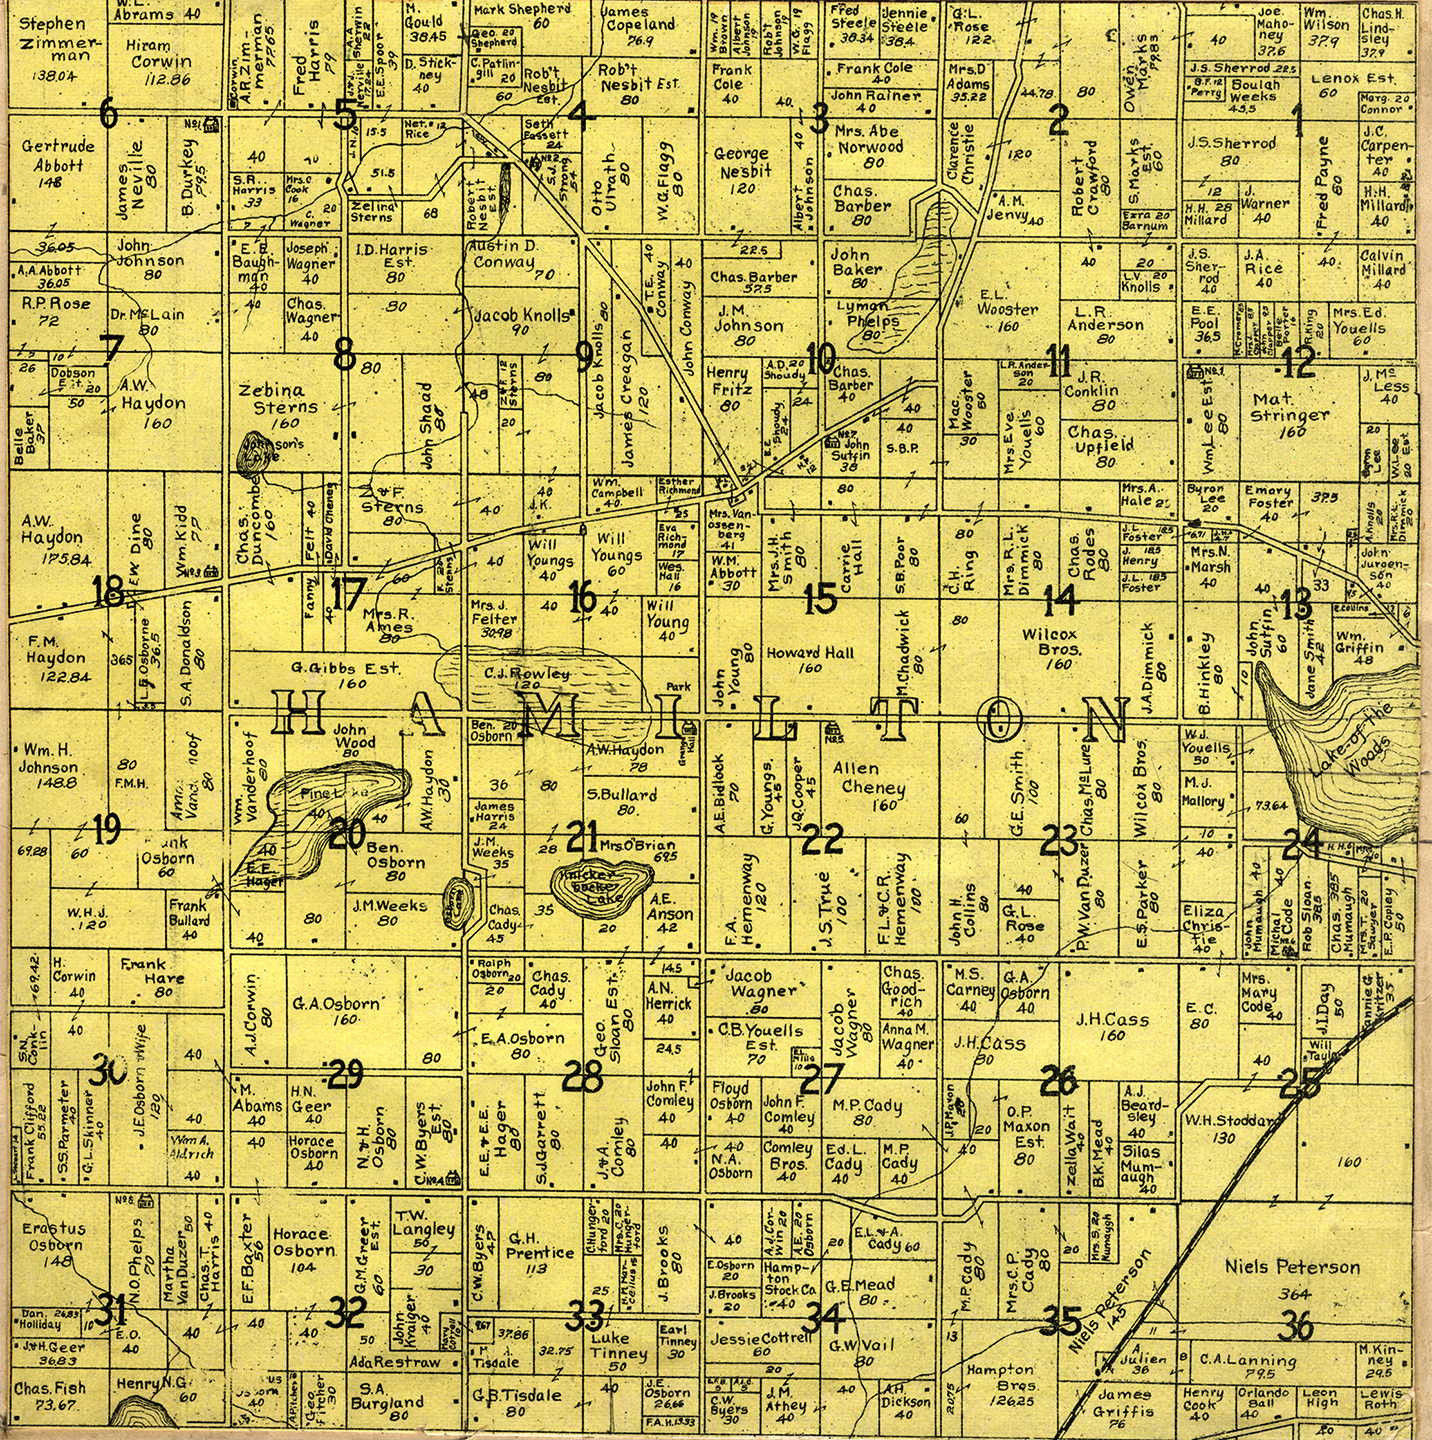 1906 Hamilton Township, Michigan landownership map